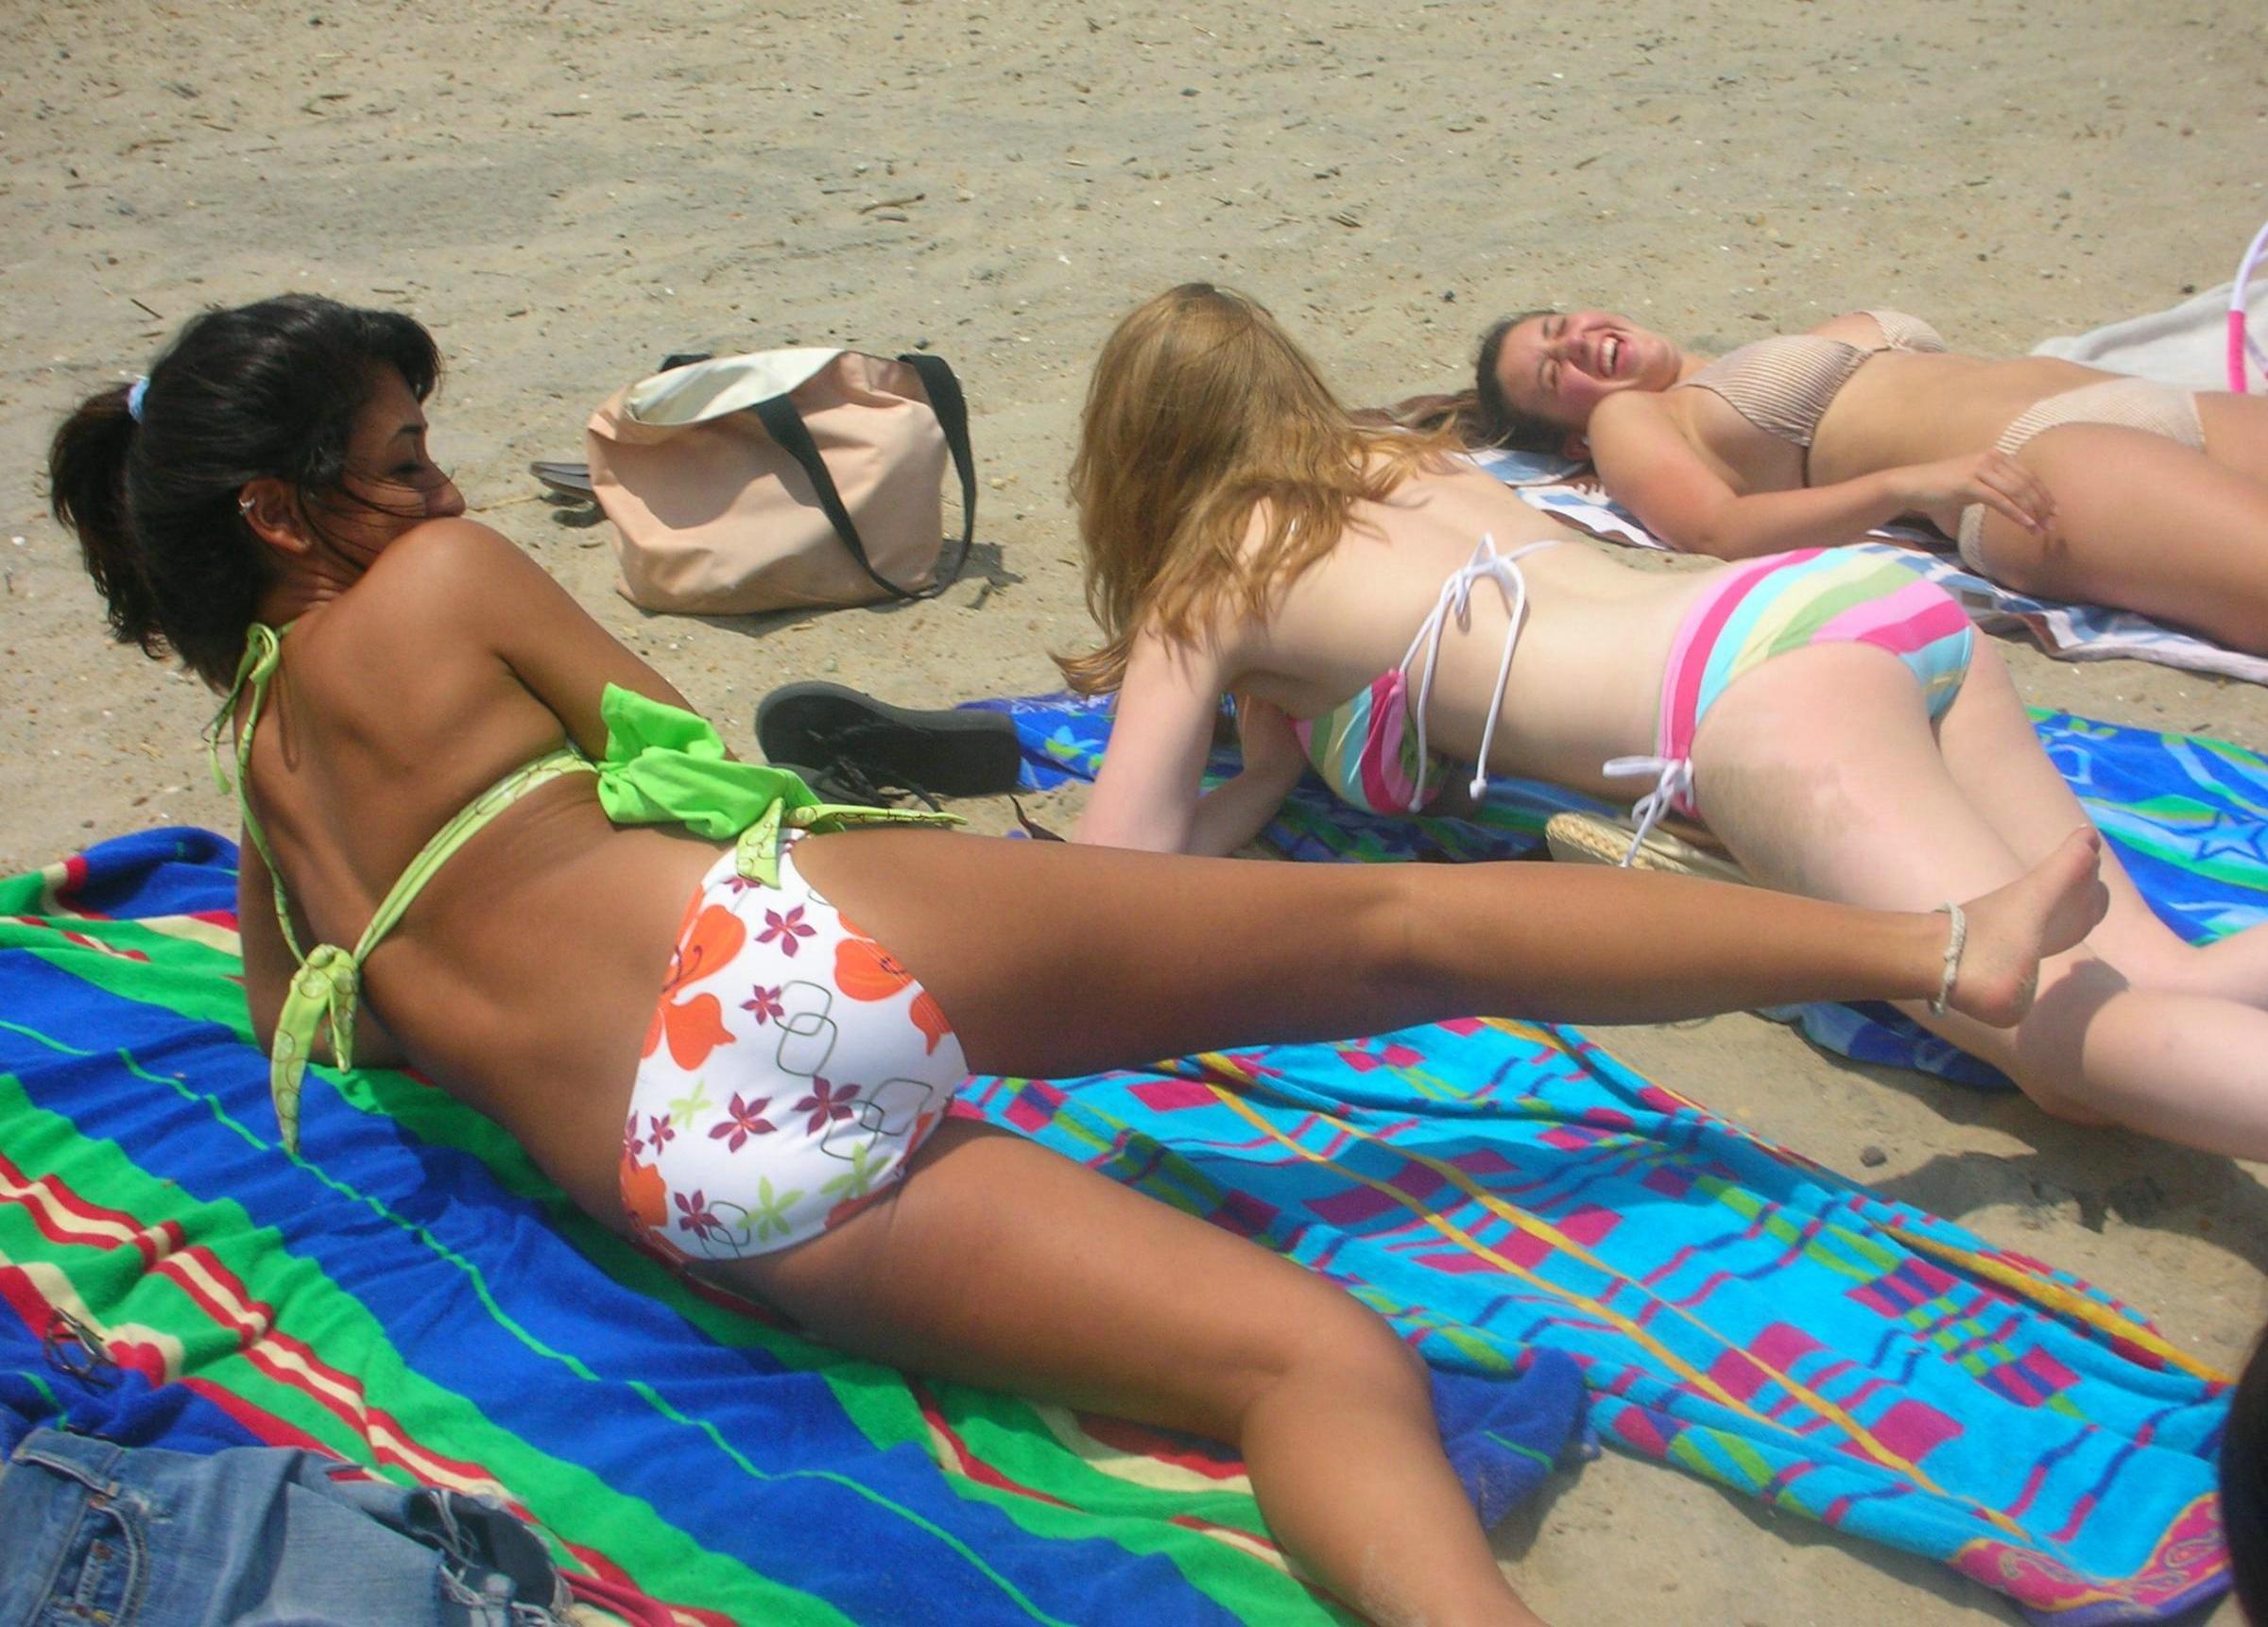 Hot naughty teens in sexy bikinis caught tanning on beach